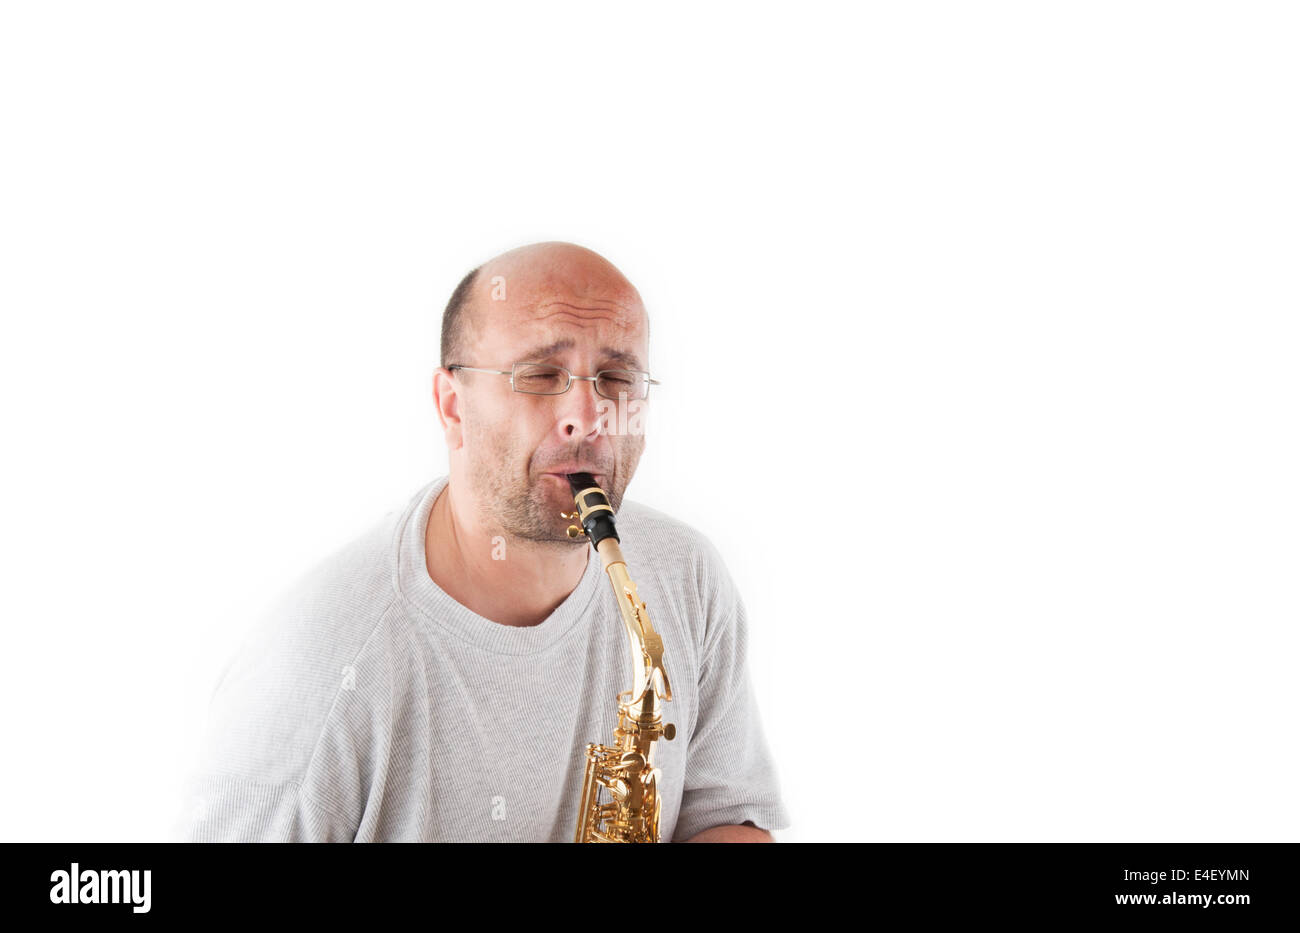 Man playing saxophone isolated on white Stock Photo